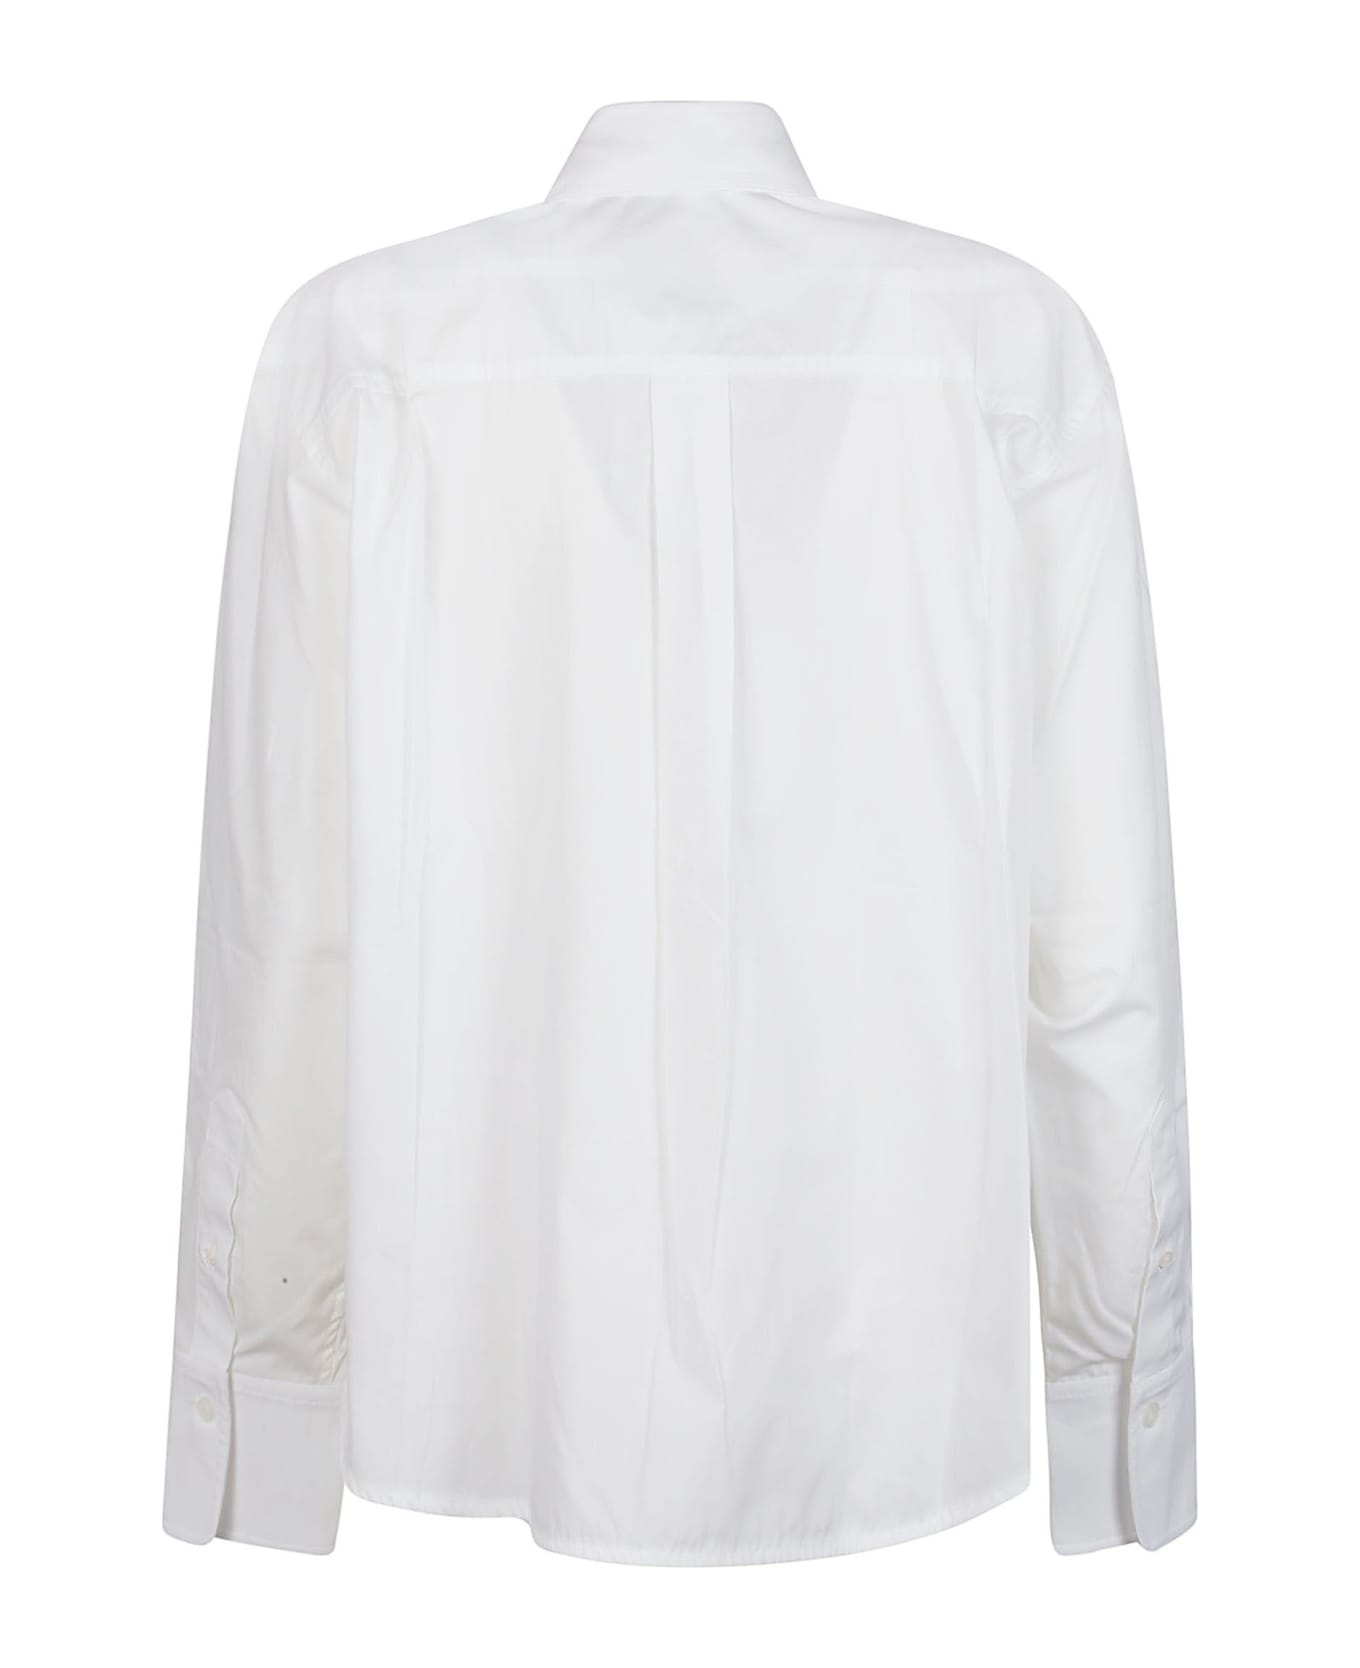 Victoria Beckham Cropped Long Sleeve Shirt - White